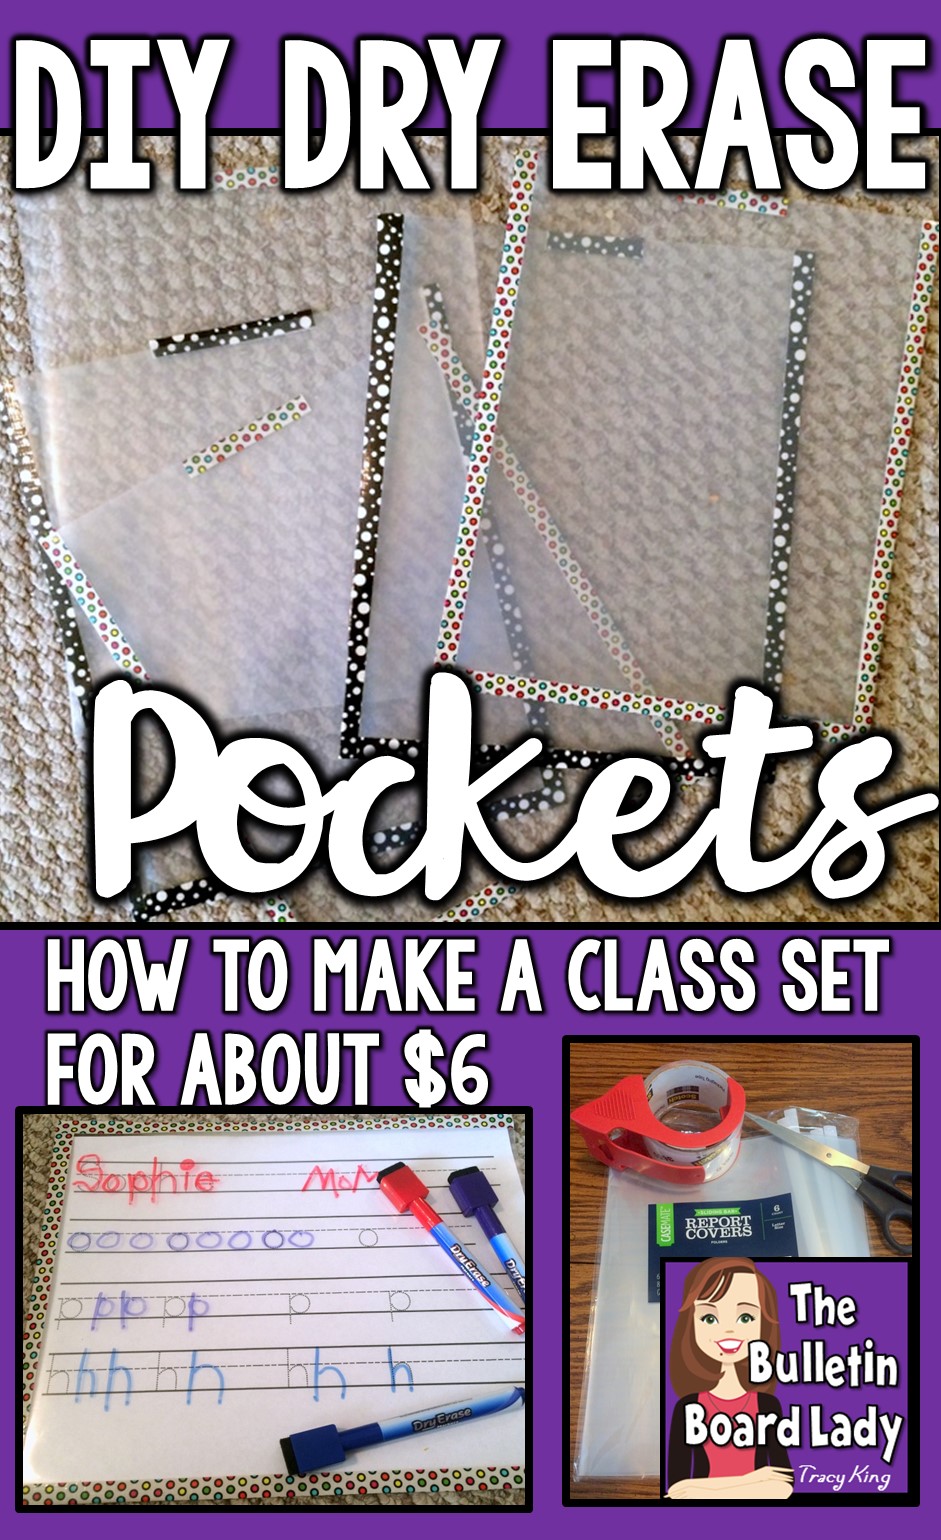 Fasmov 20 Dry Erase Pockets 10 Inch x 13 Inch Pockets Perfect for Classroom Organization,Teaching Supplies